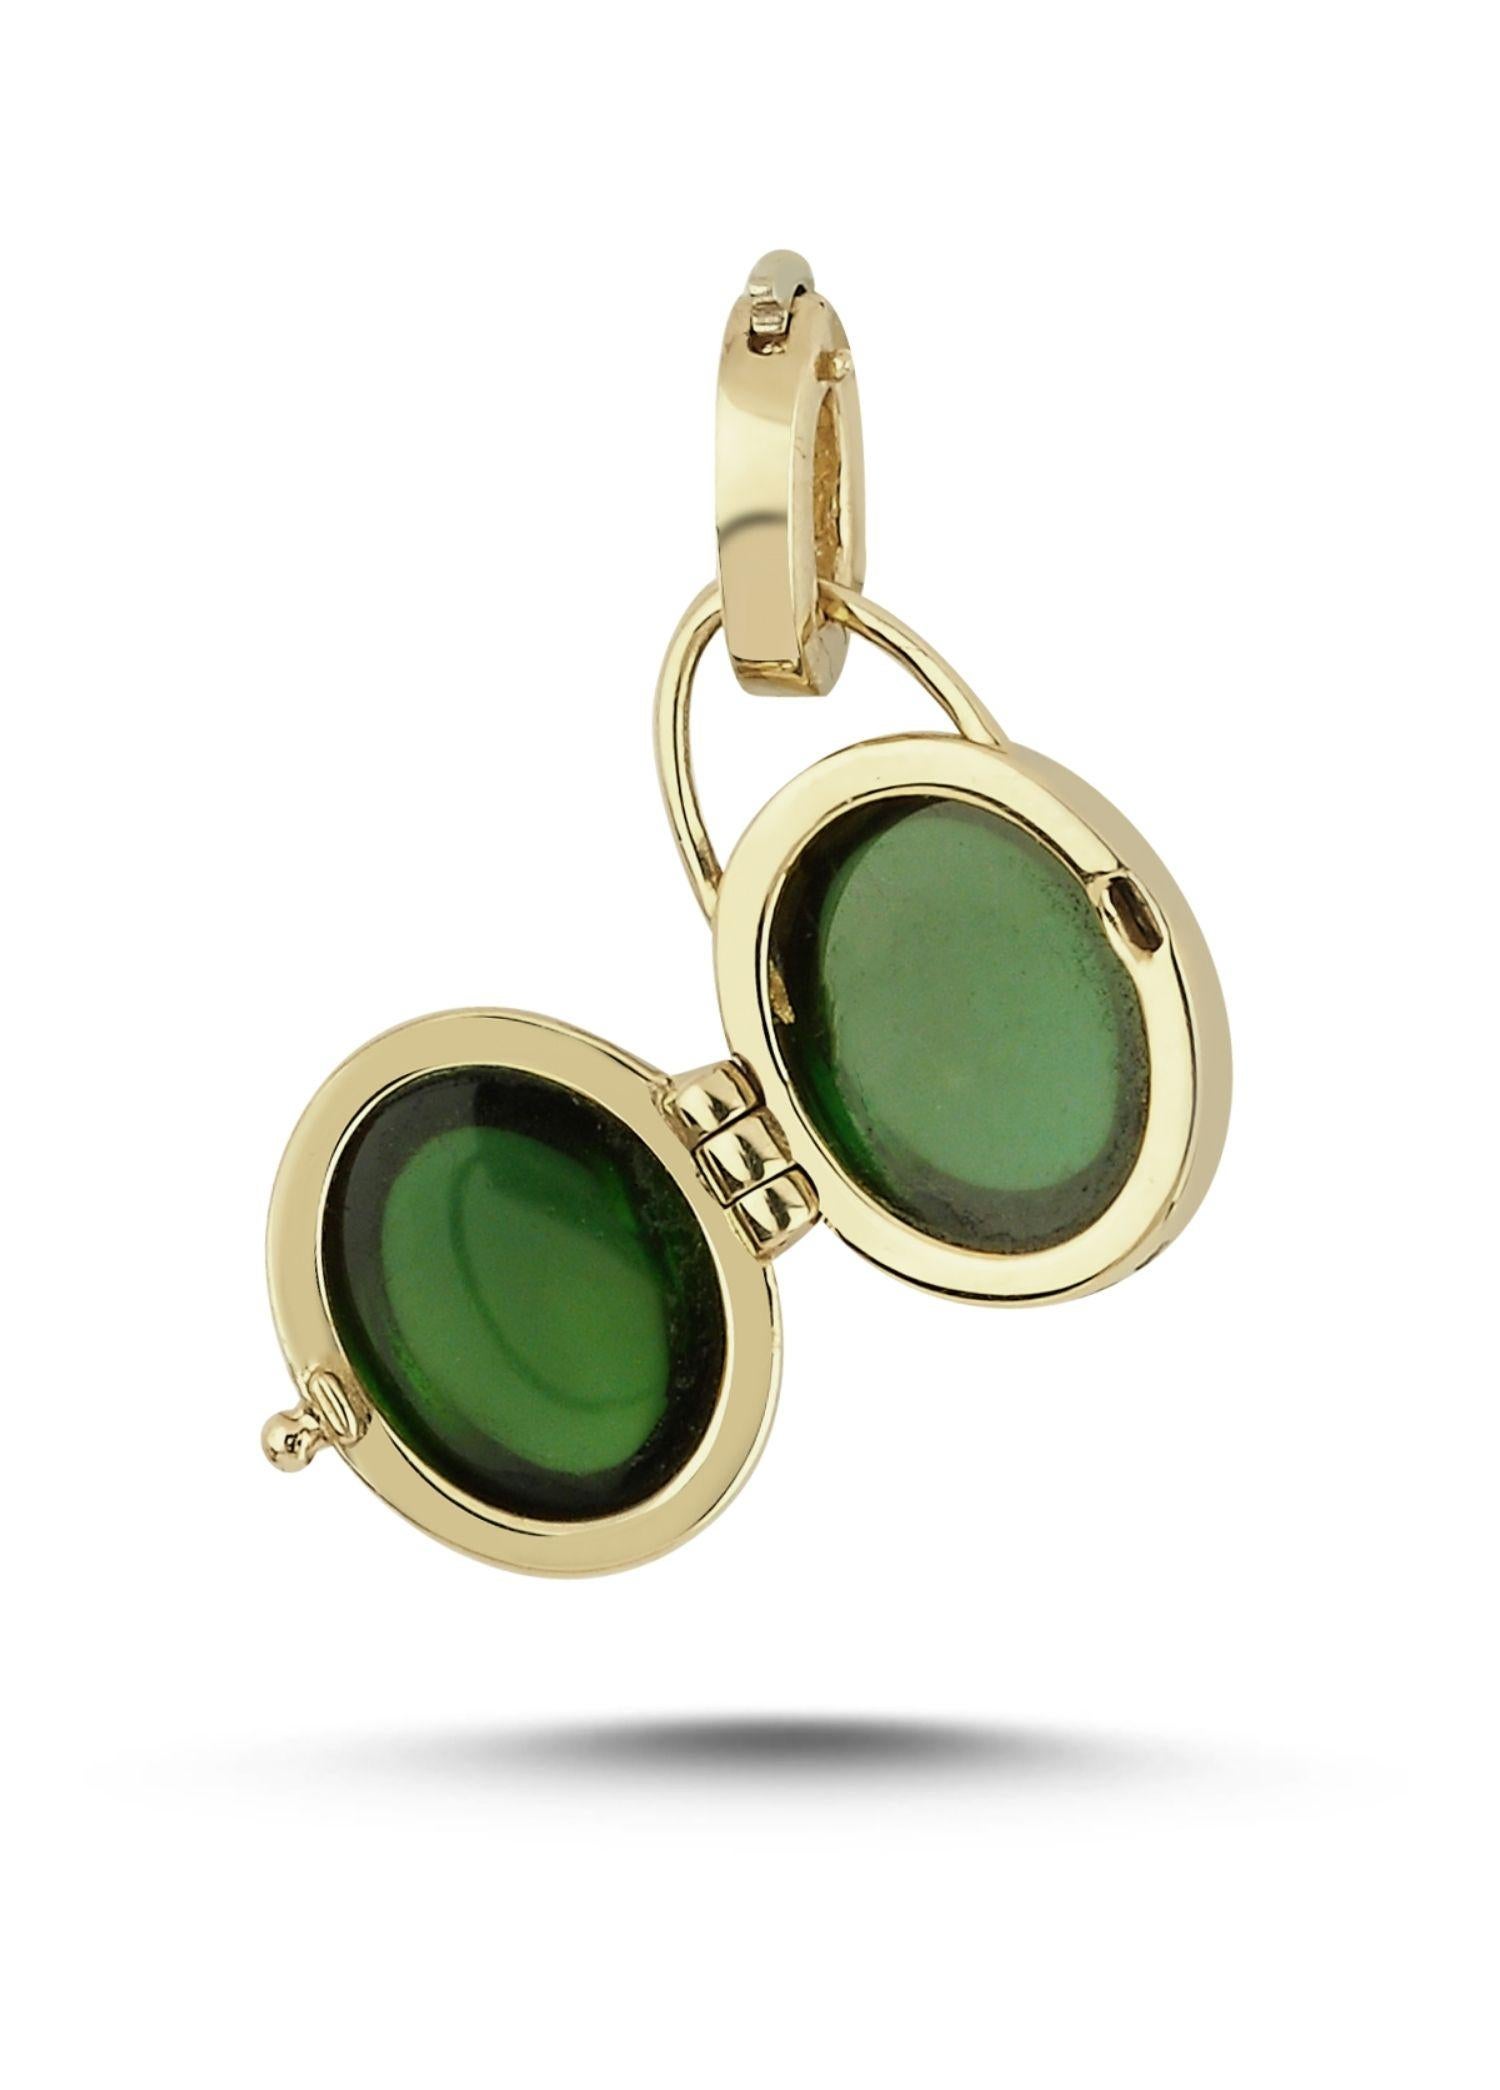 Melie Jewelry Green Tourmaline Locket Charm

14K Yellow Gold, 6.00 ct Green Tourmaline

The Story Behind
Melie Jewelry's 